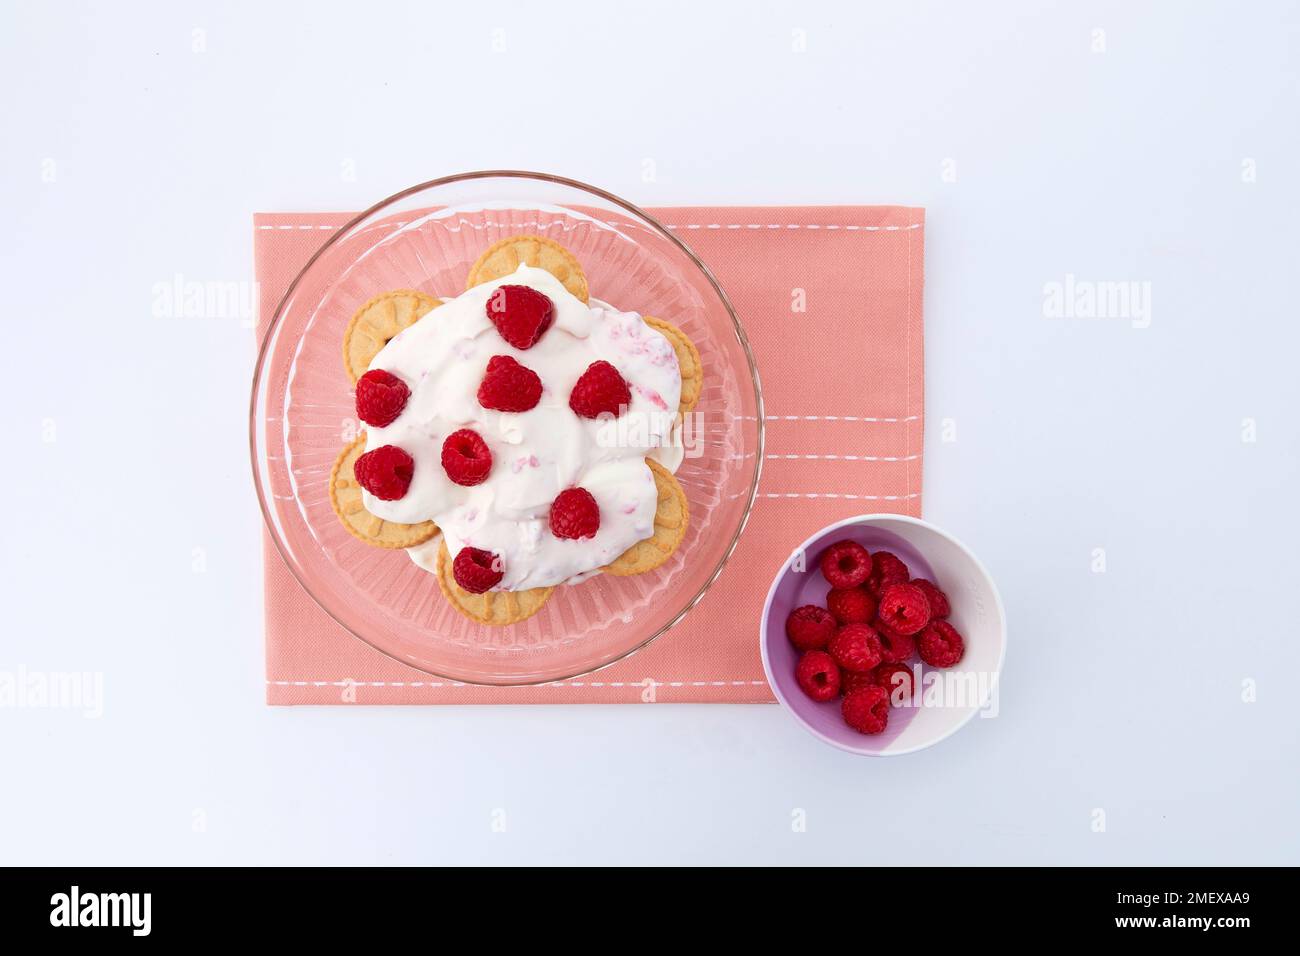 Raspberry ripple layer cake - Step 2 - Start layering jammy biscuits, cream and raspberries alternately on cake stand Stock Photo